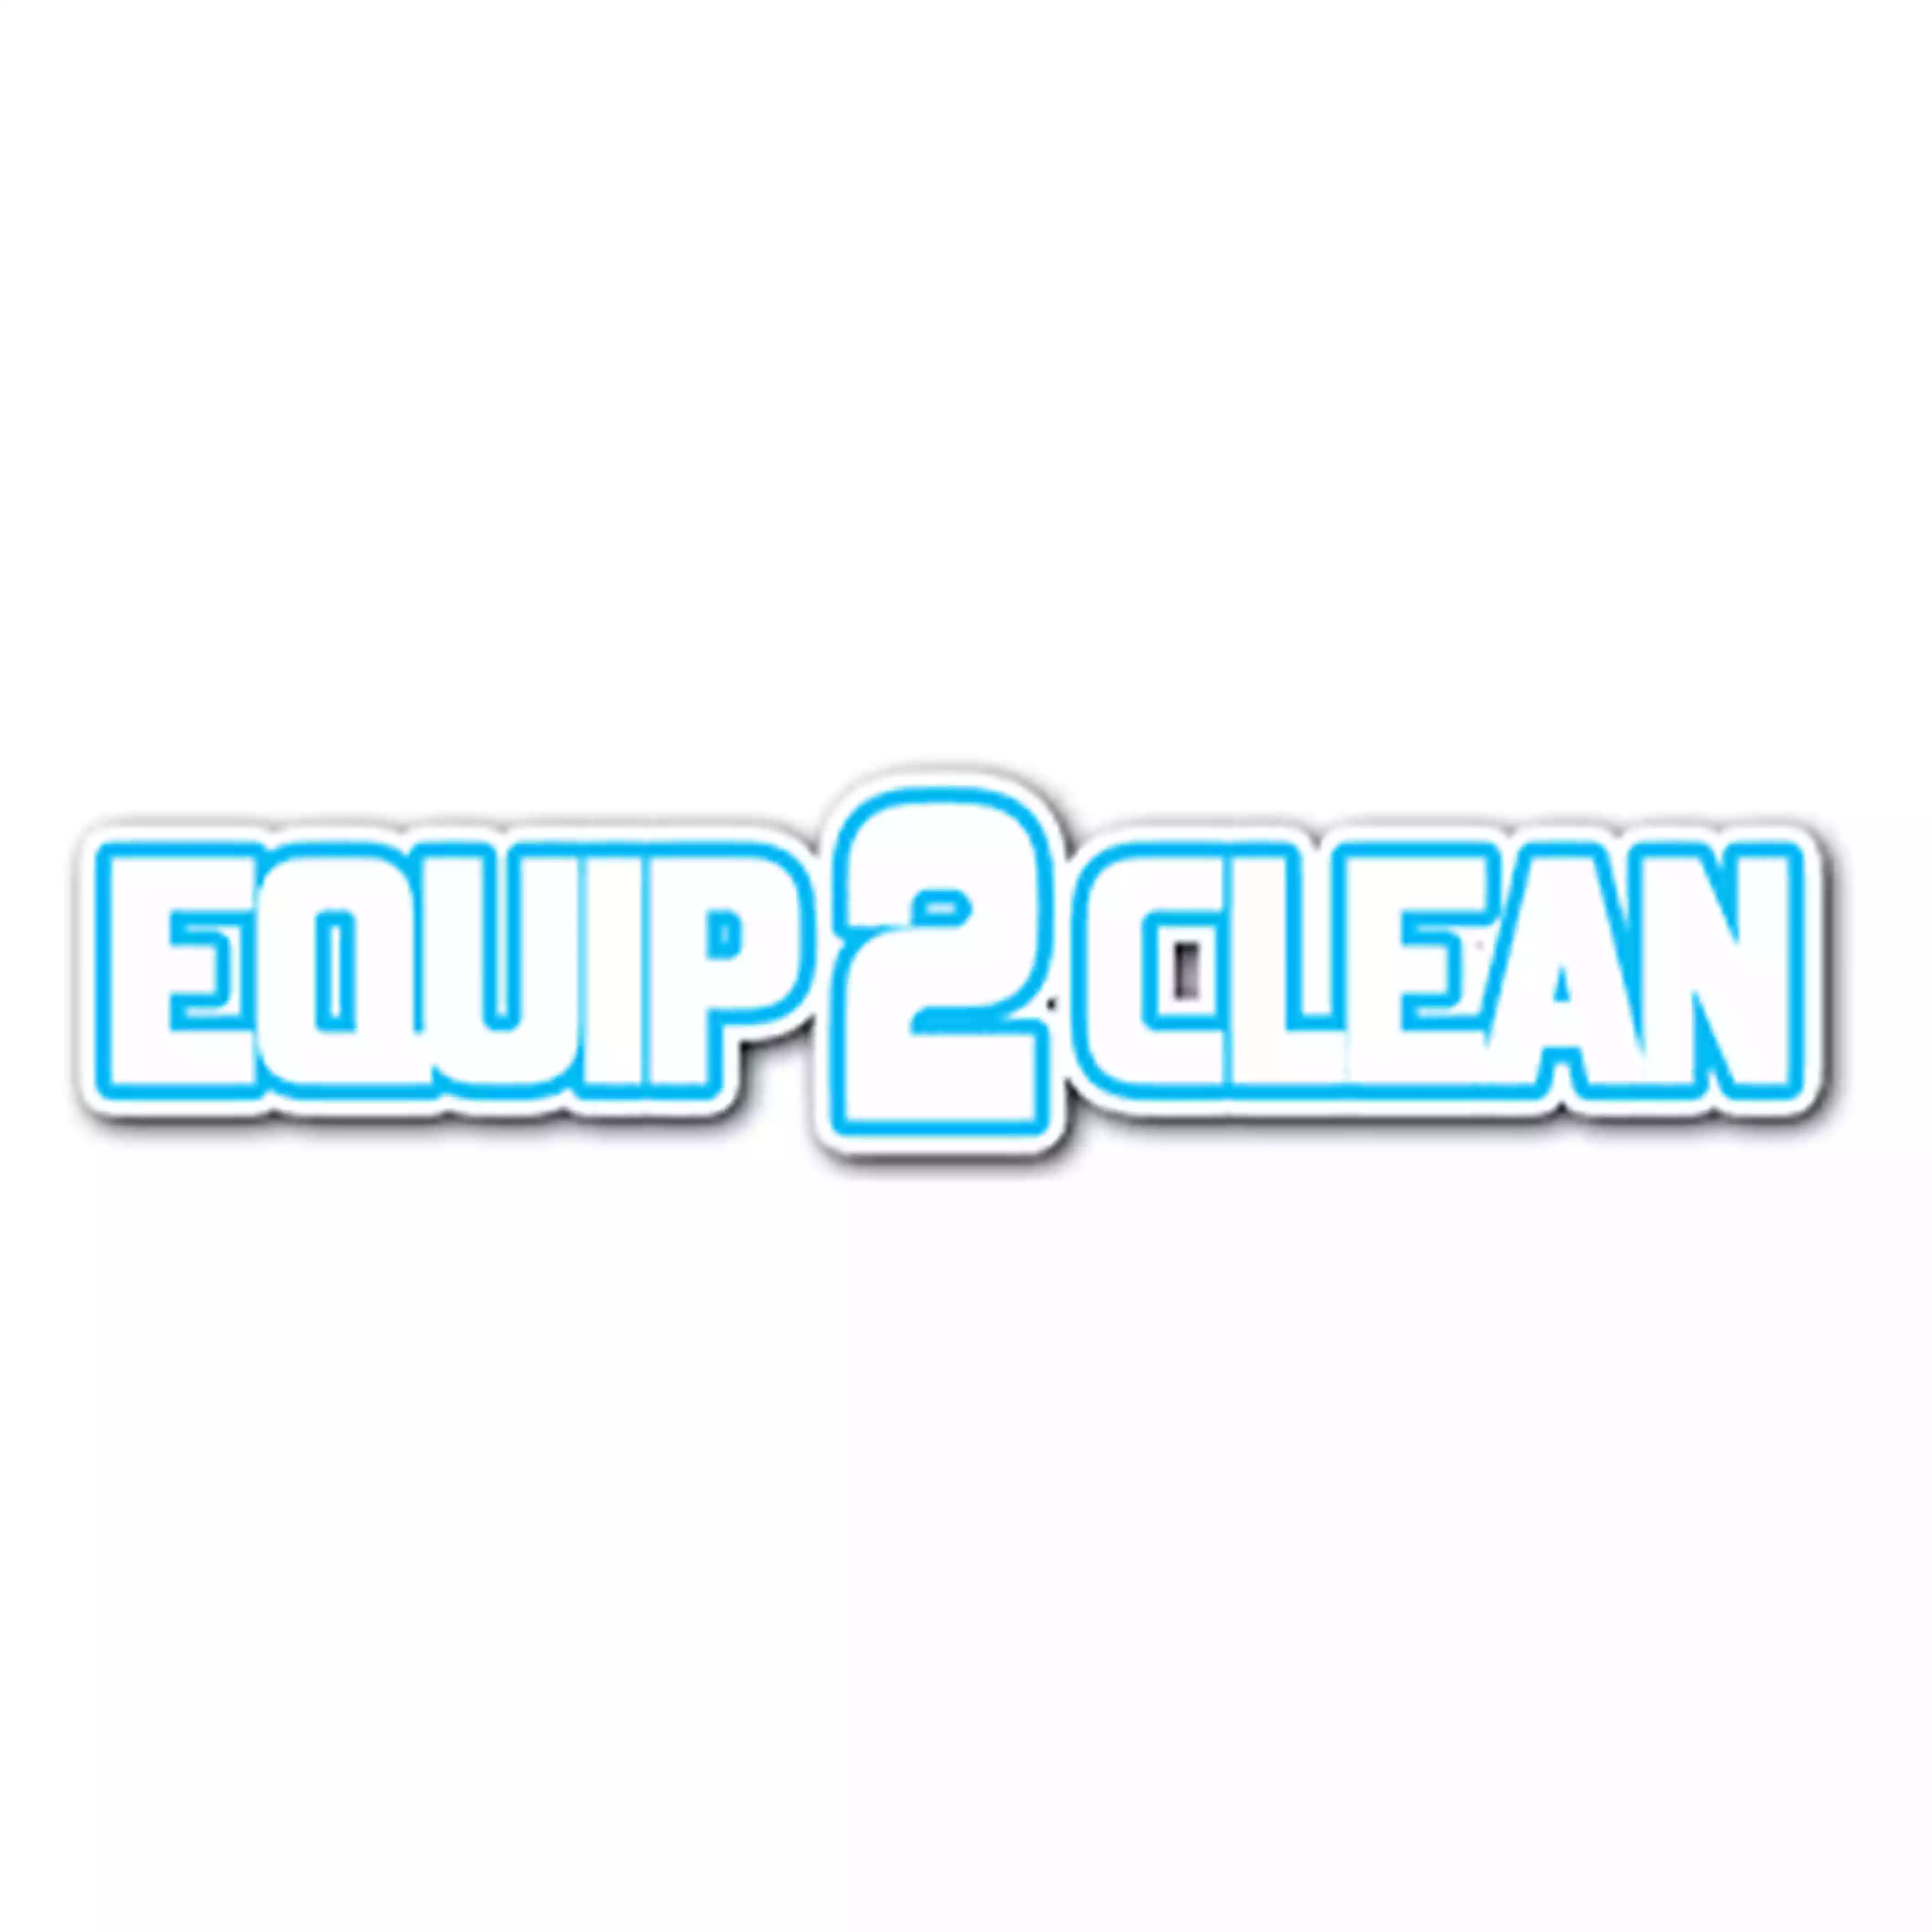 Shop Equip2Clean logo